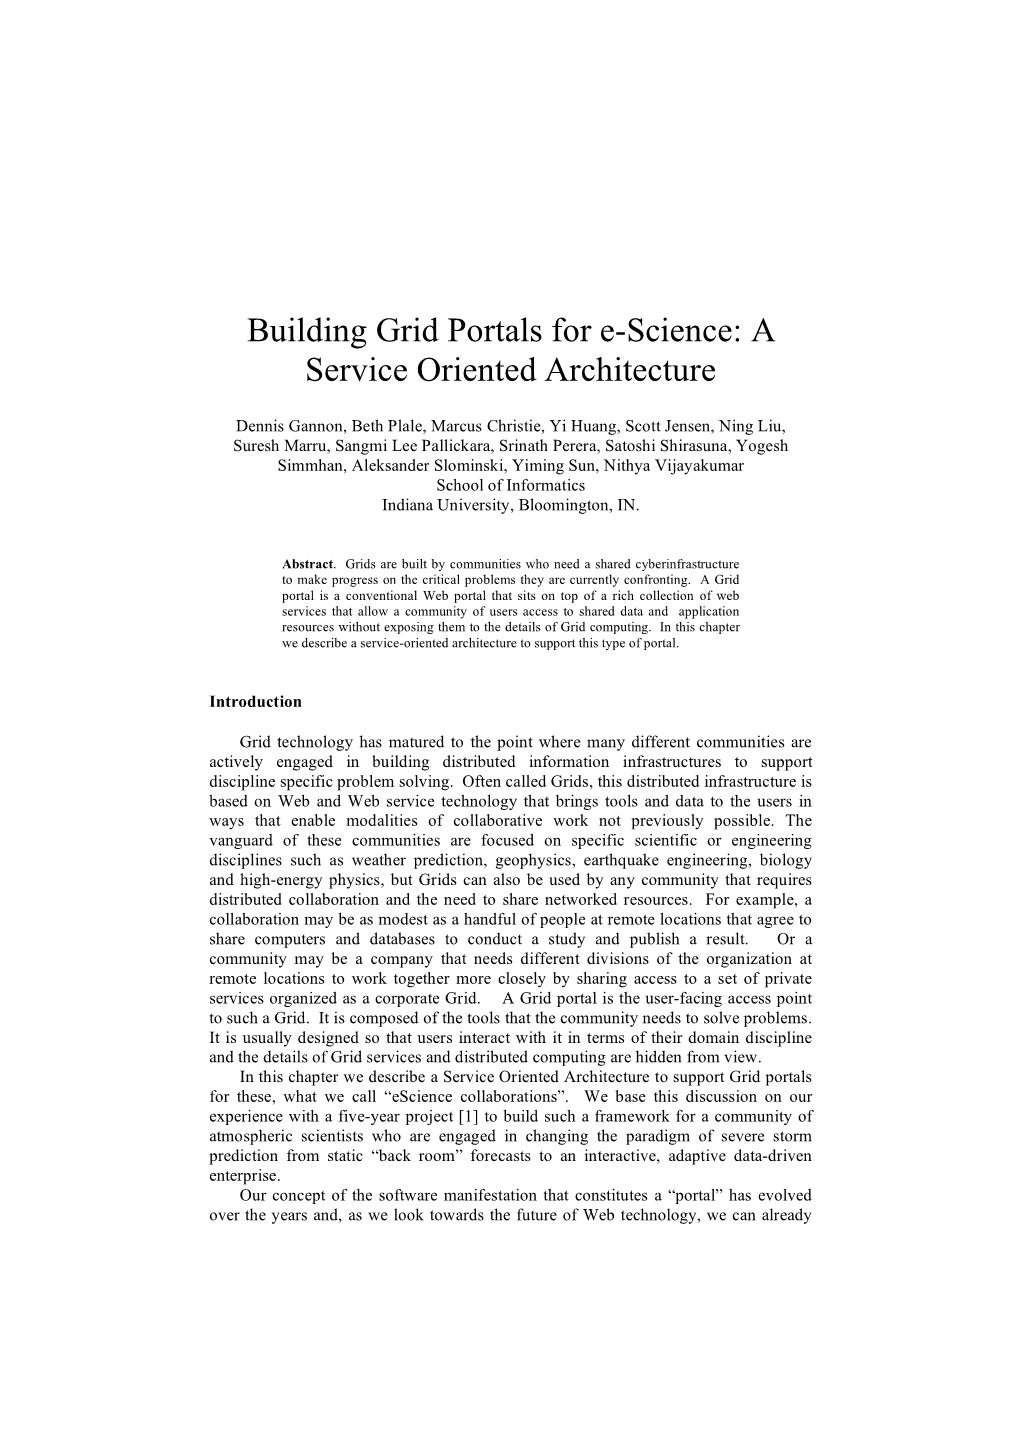 Building Grid Portals for E-Science: a Service Oriented Architecture